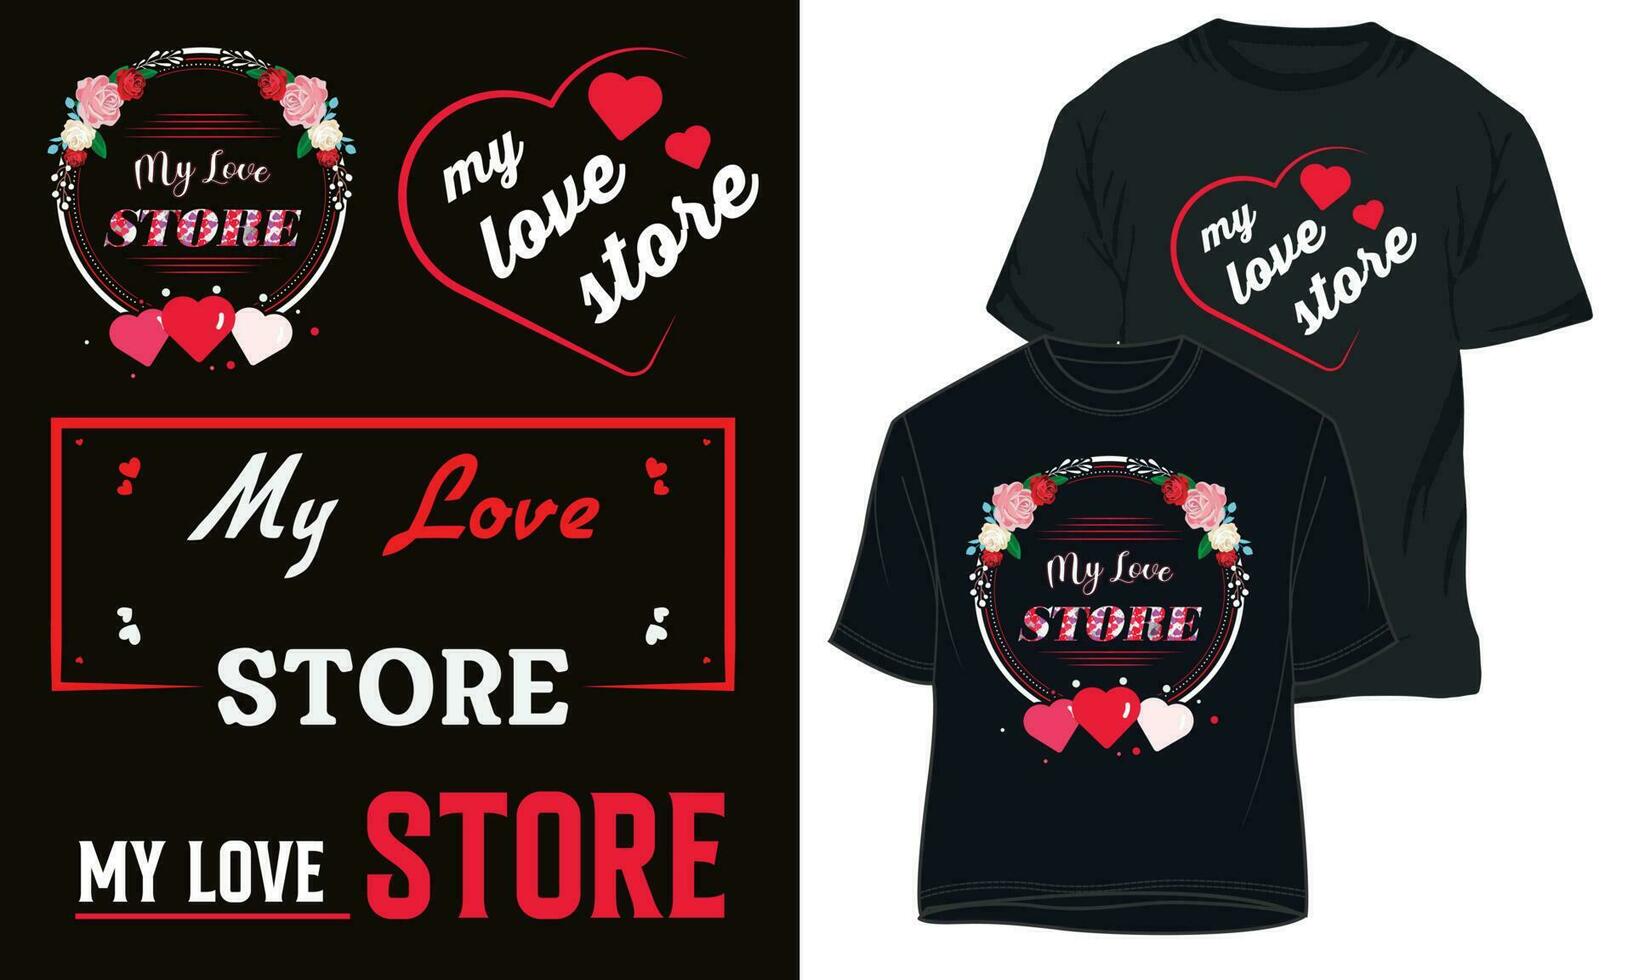 My Love Store. typography t-shirt design vector